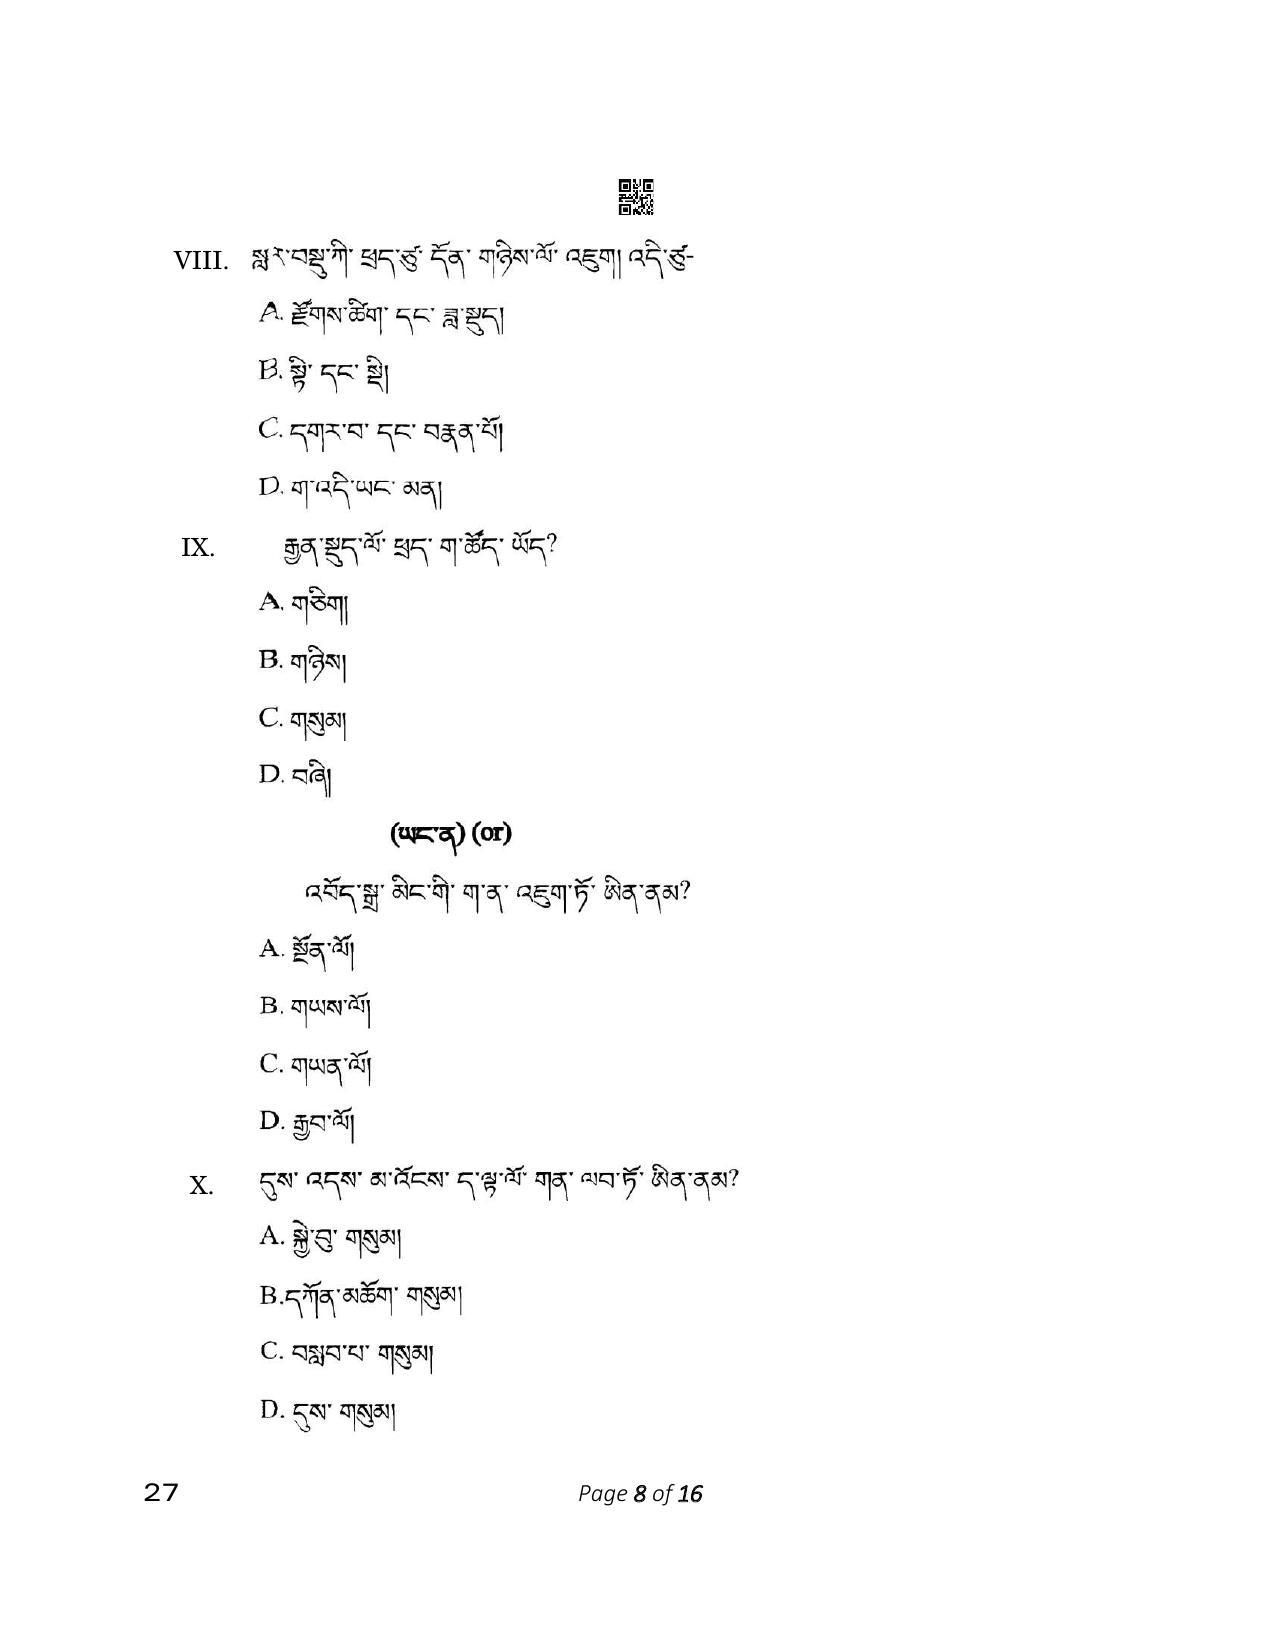 CBSE Class 12 27_Bhutia 2023 2023 Question Paper - Page 8